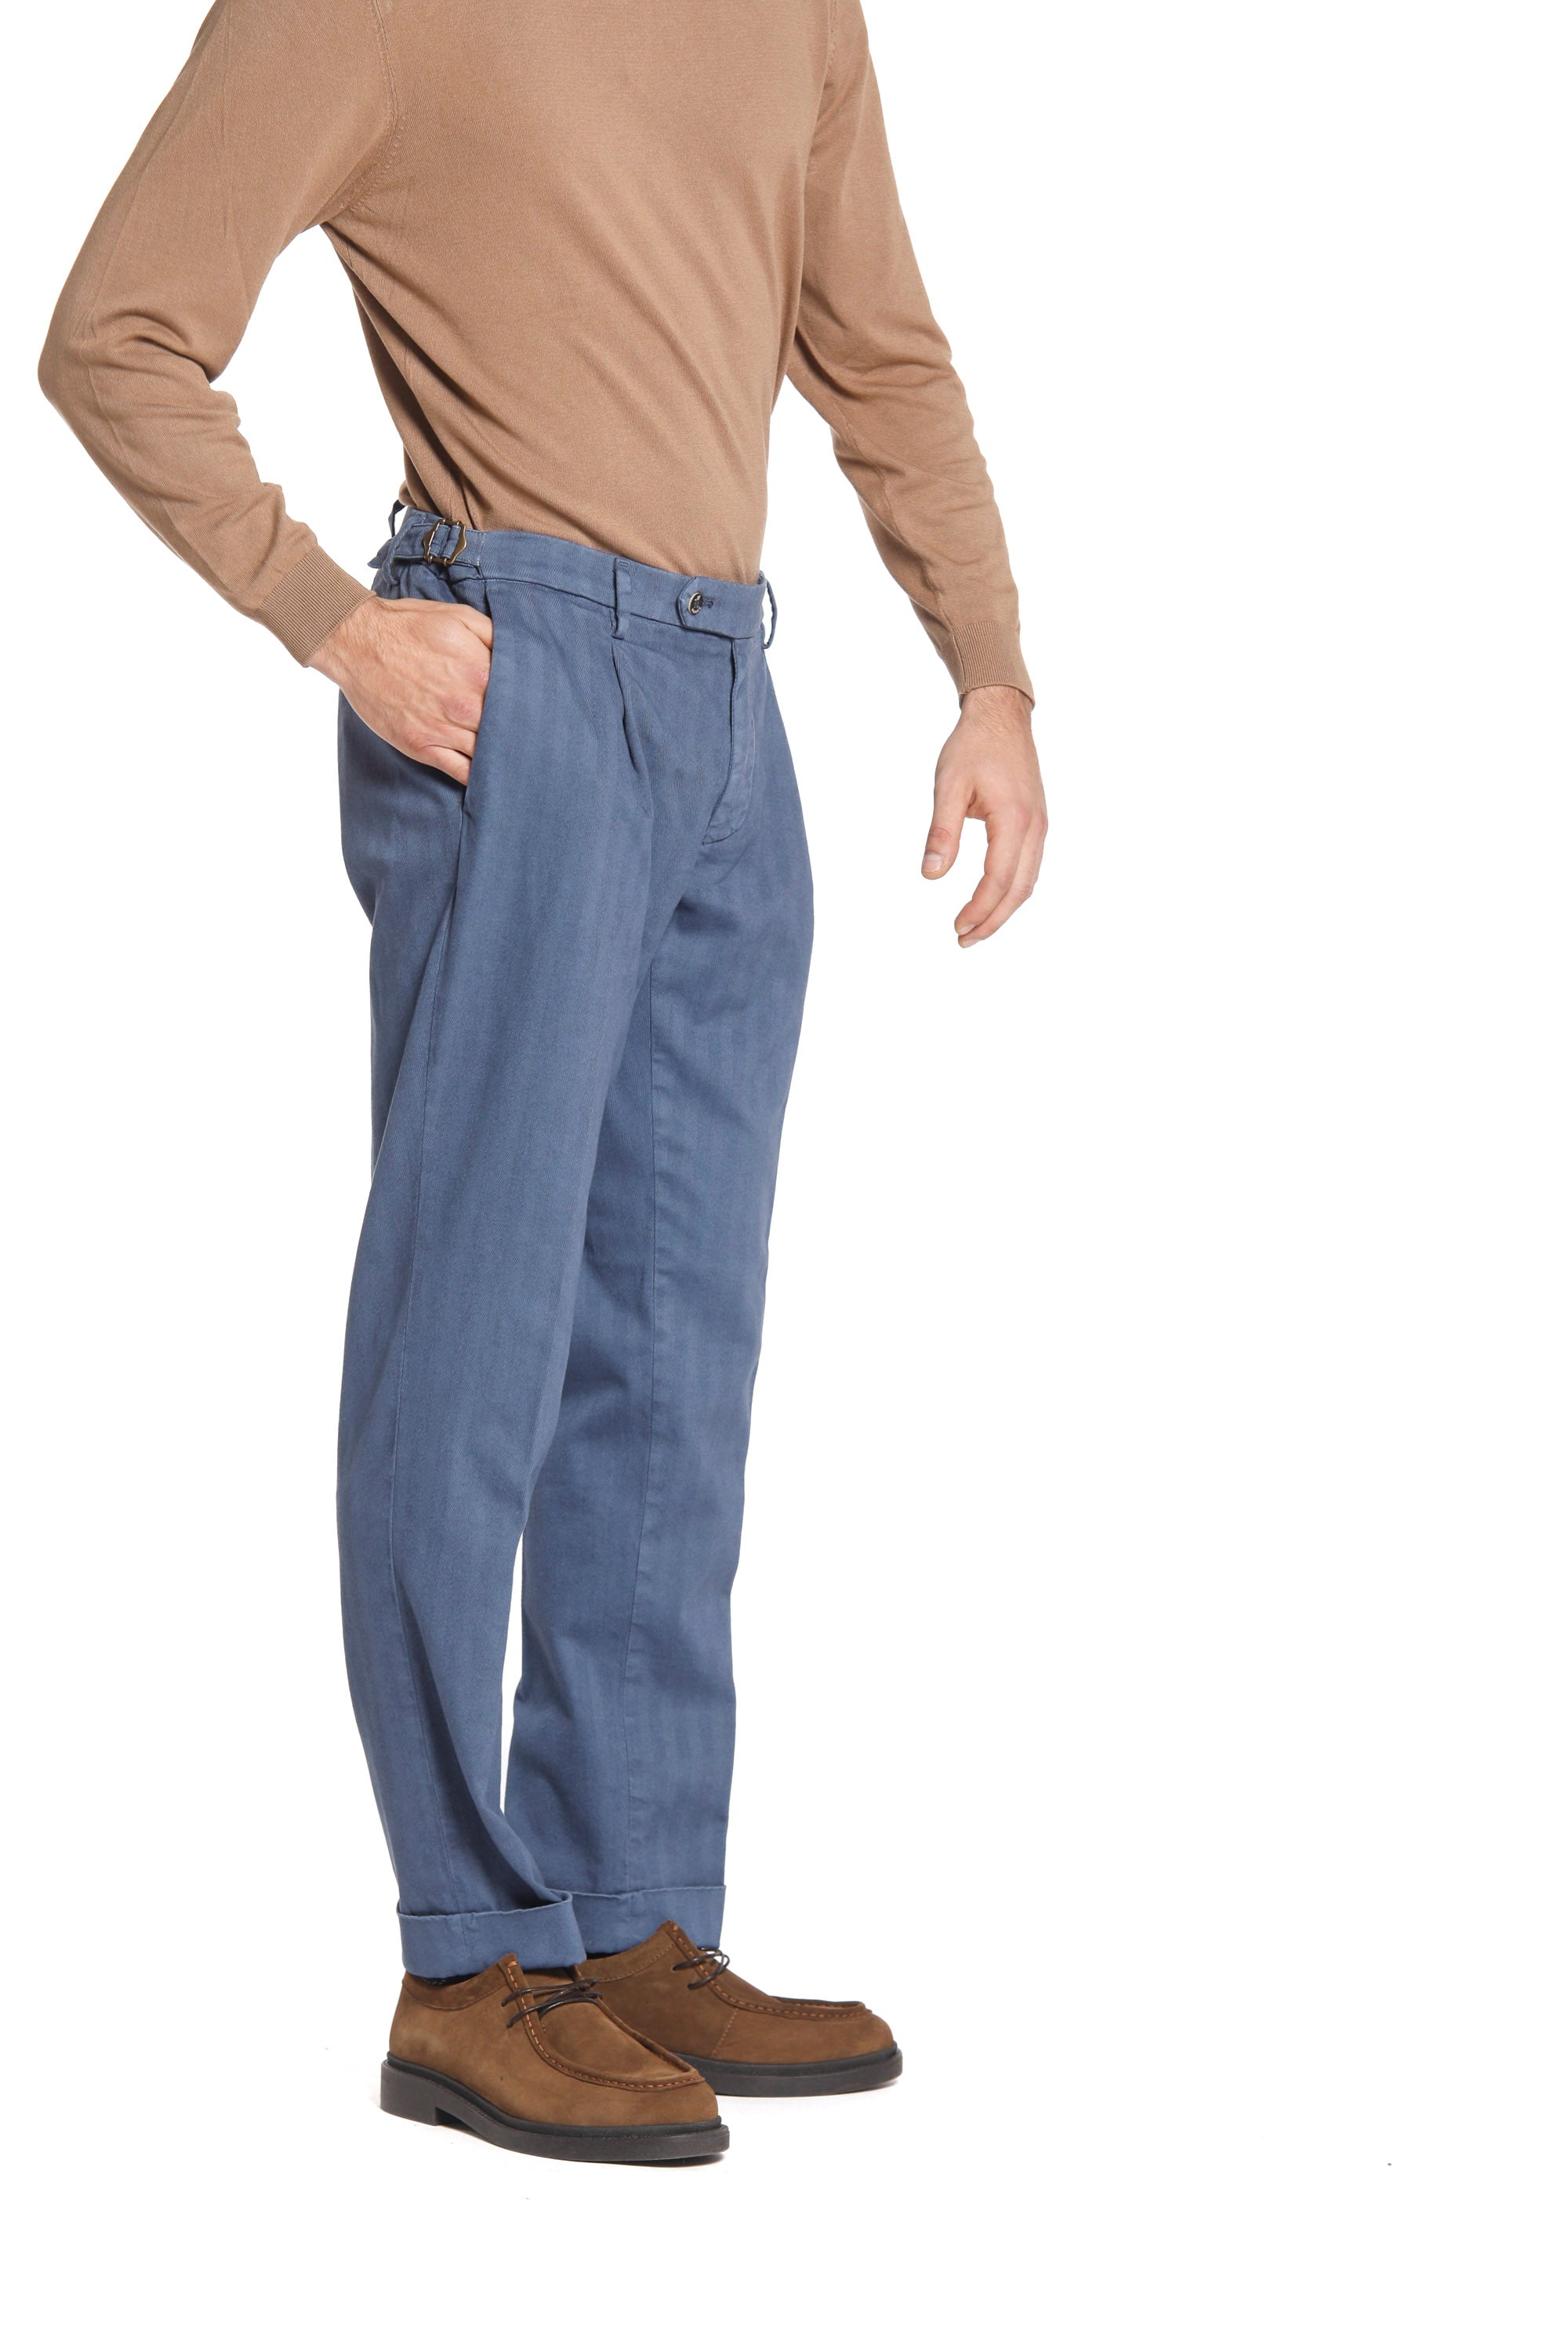 Genova Style pantalon chino homme avec motif en résca coupe regular